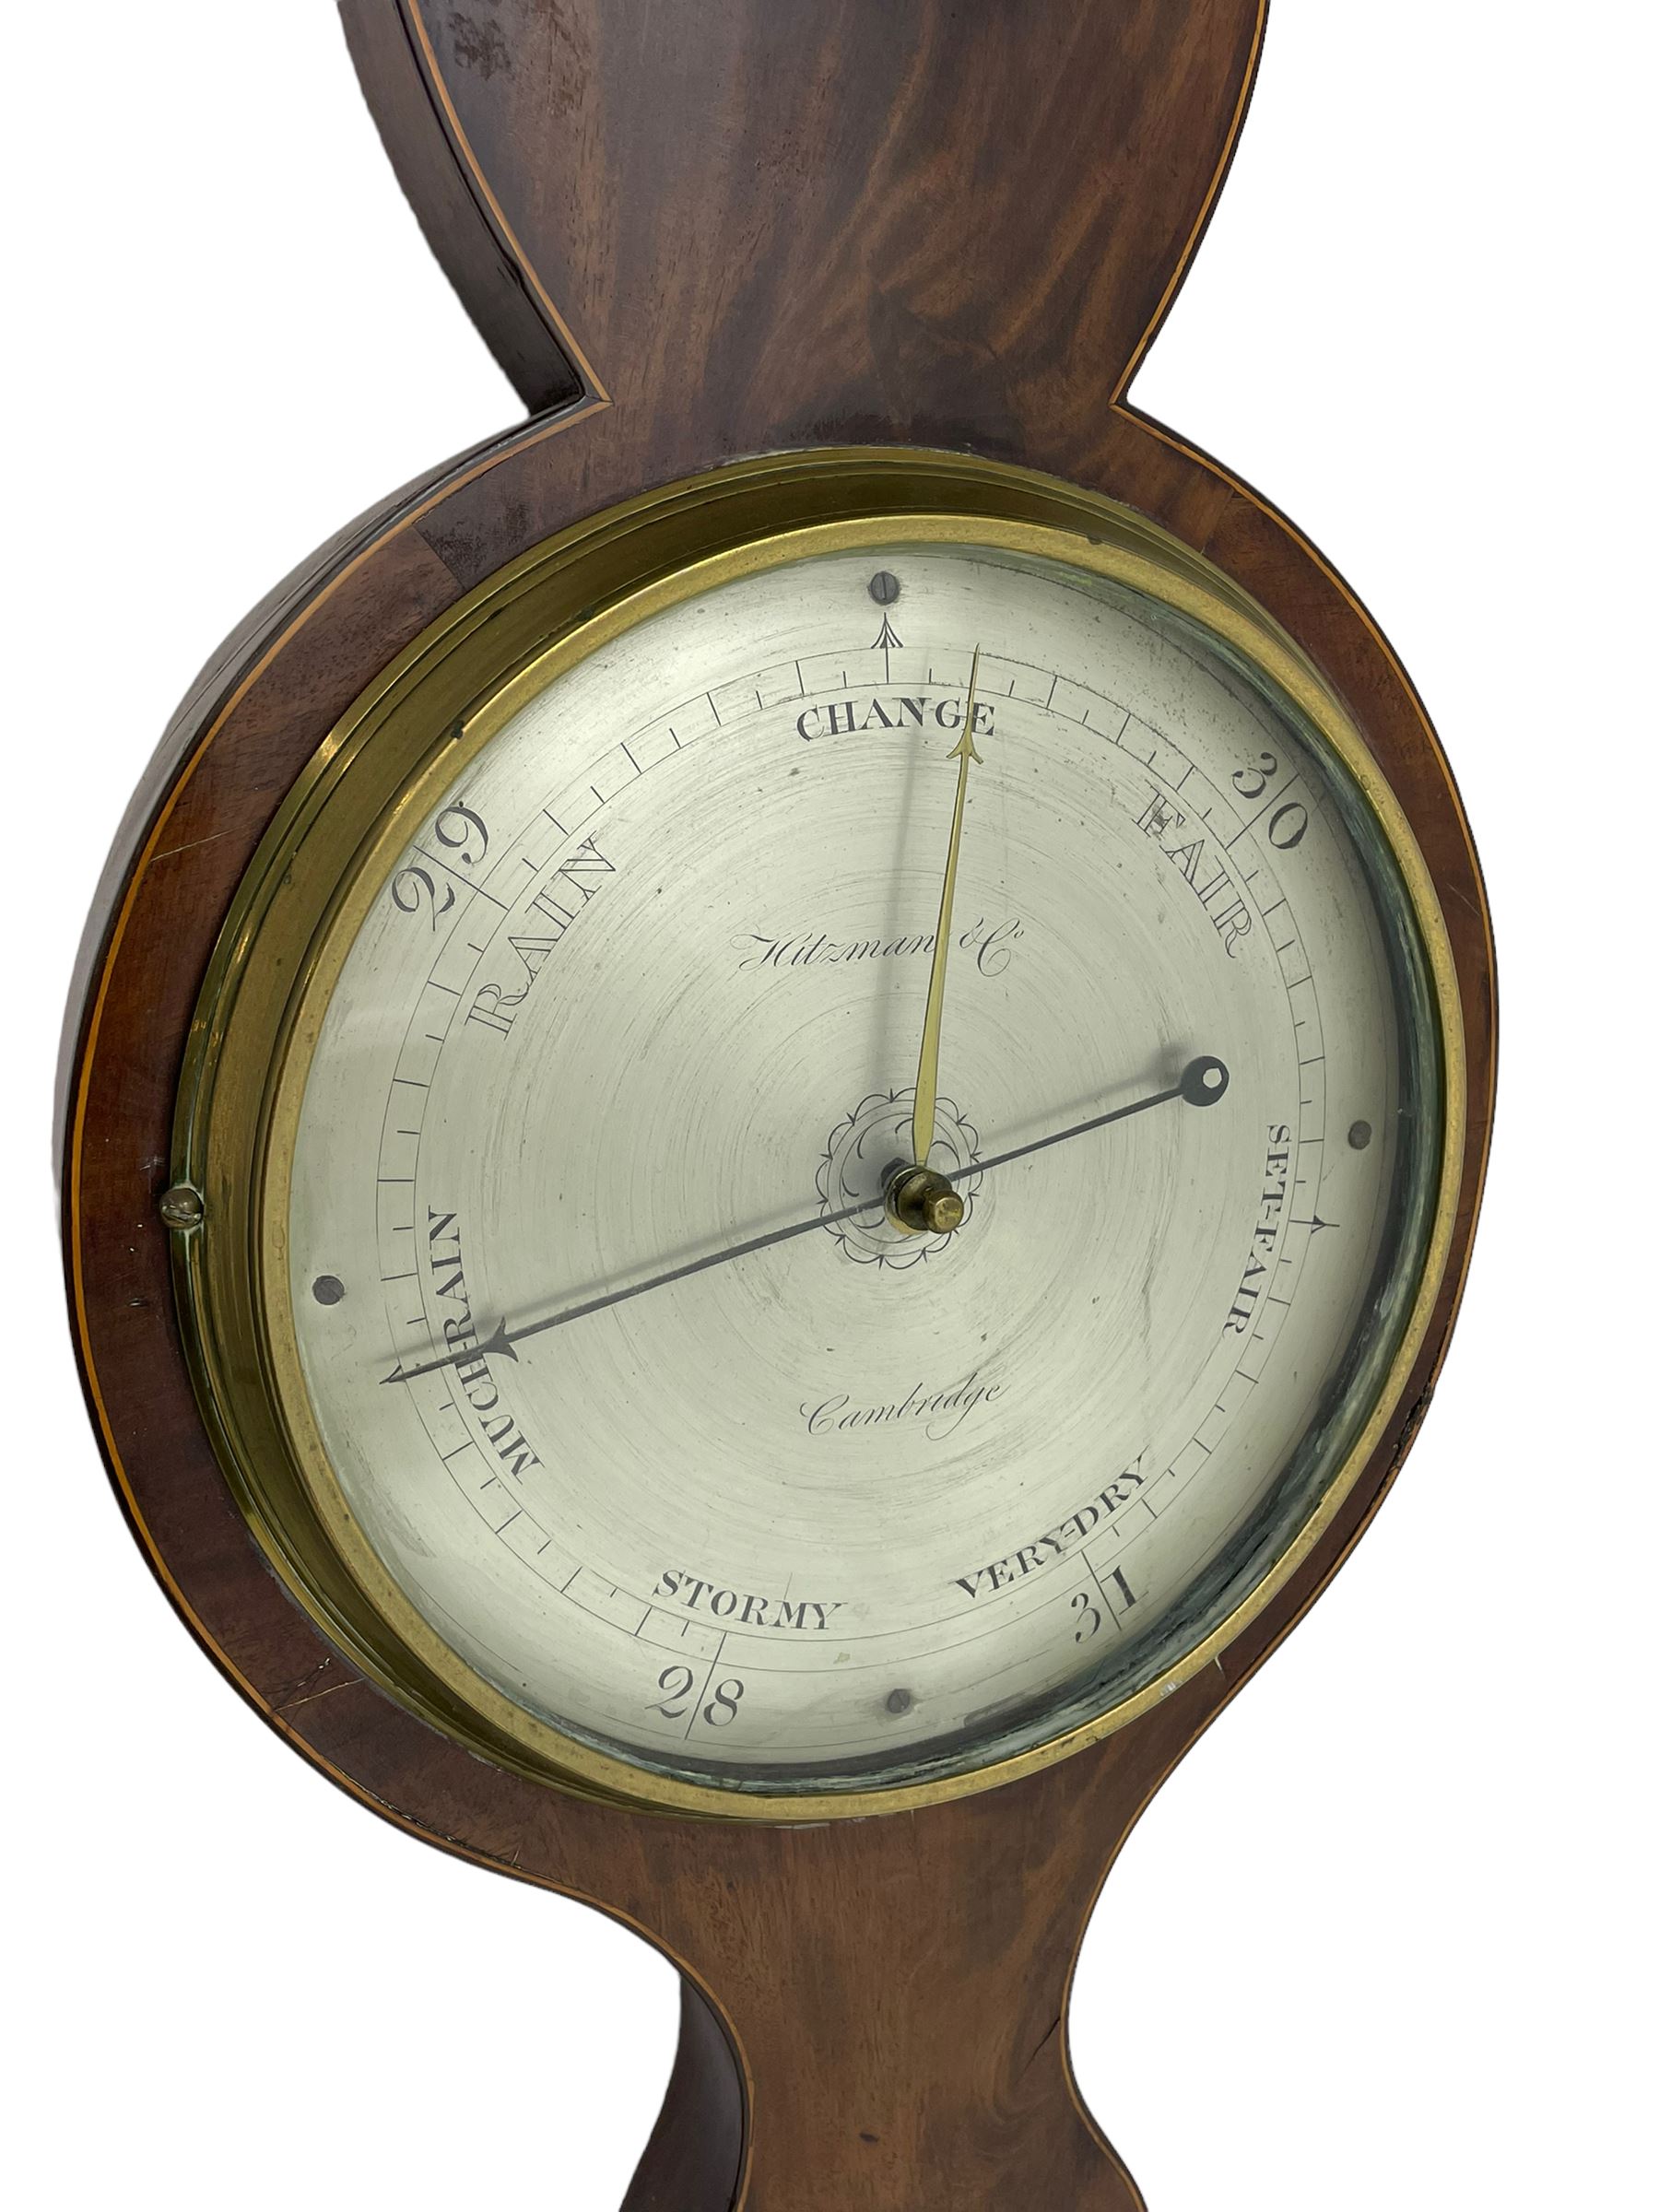 Hitzman & Co of Cambridge - Early 19th century mahogany mercury wheel barometer c1830 - Image 4 of 7